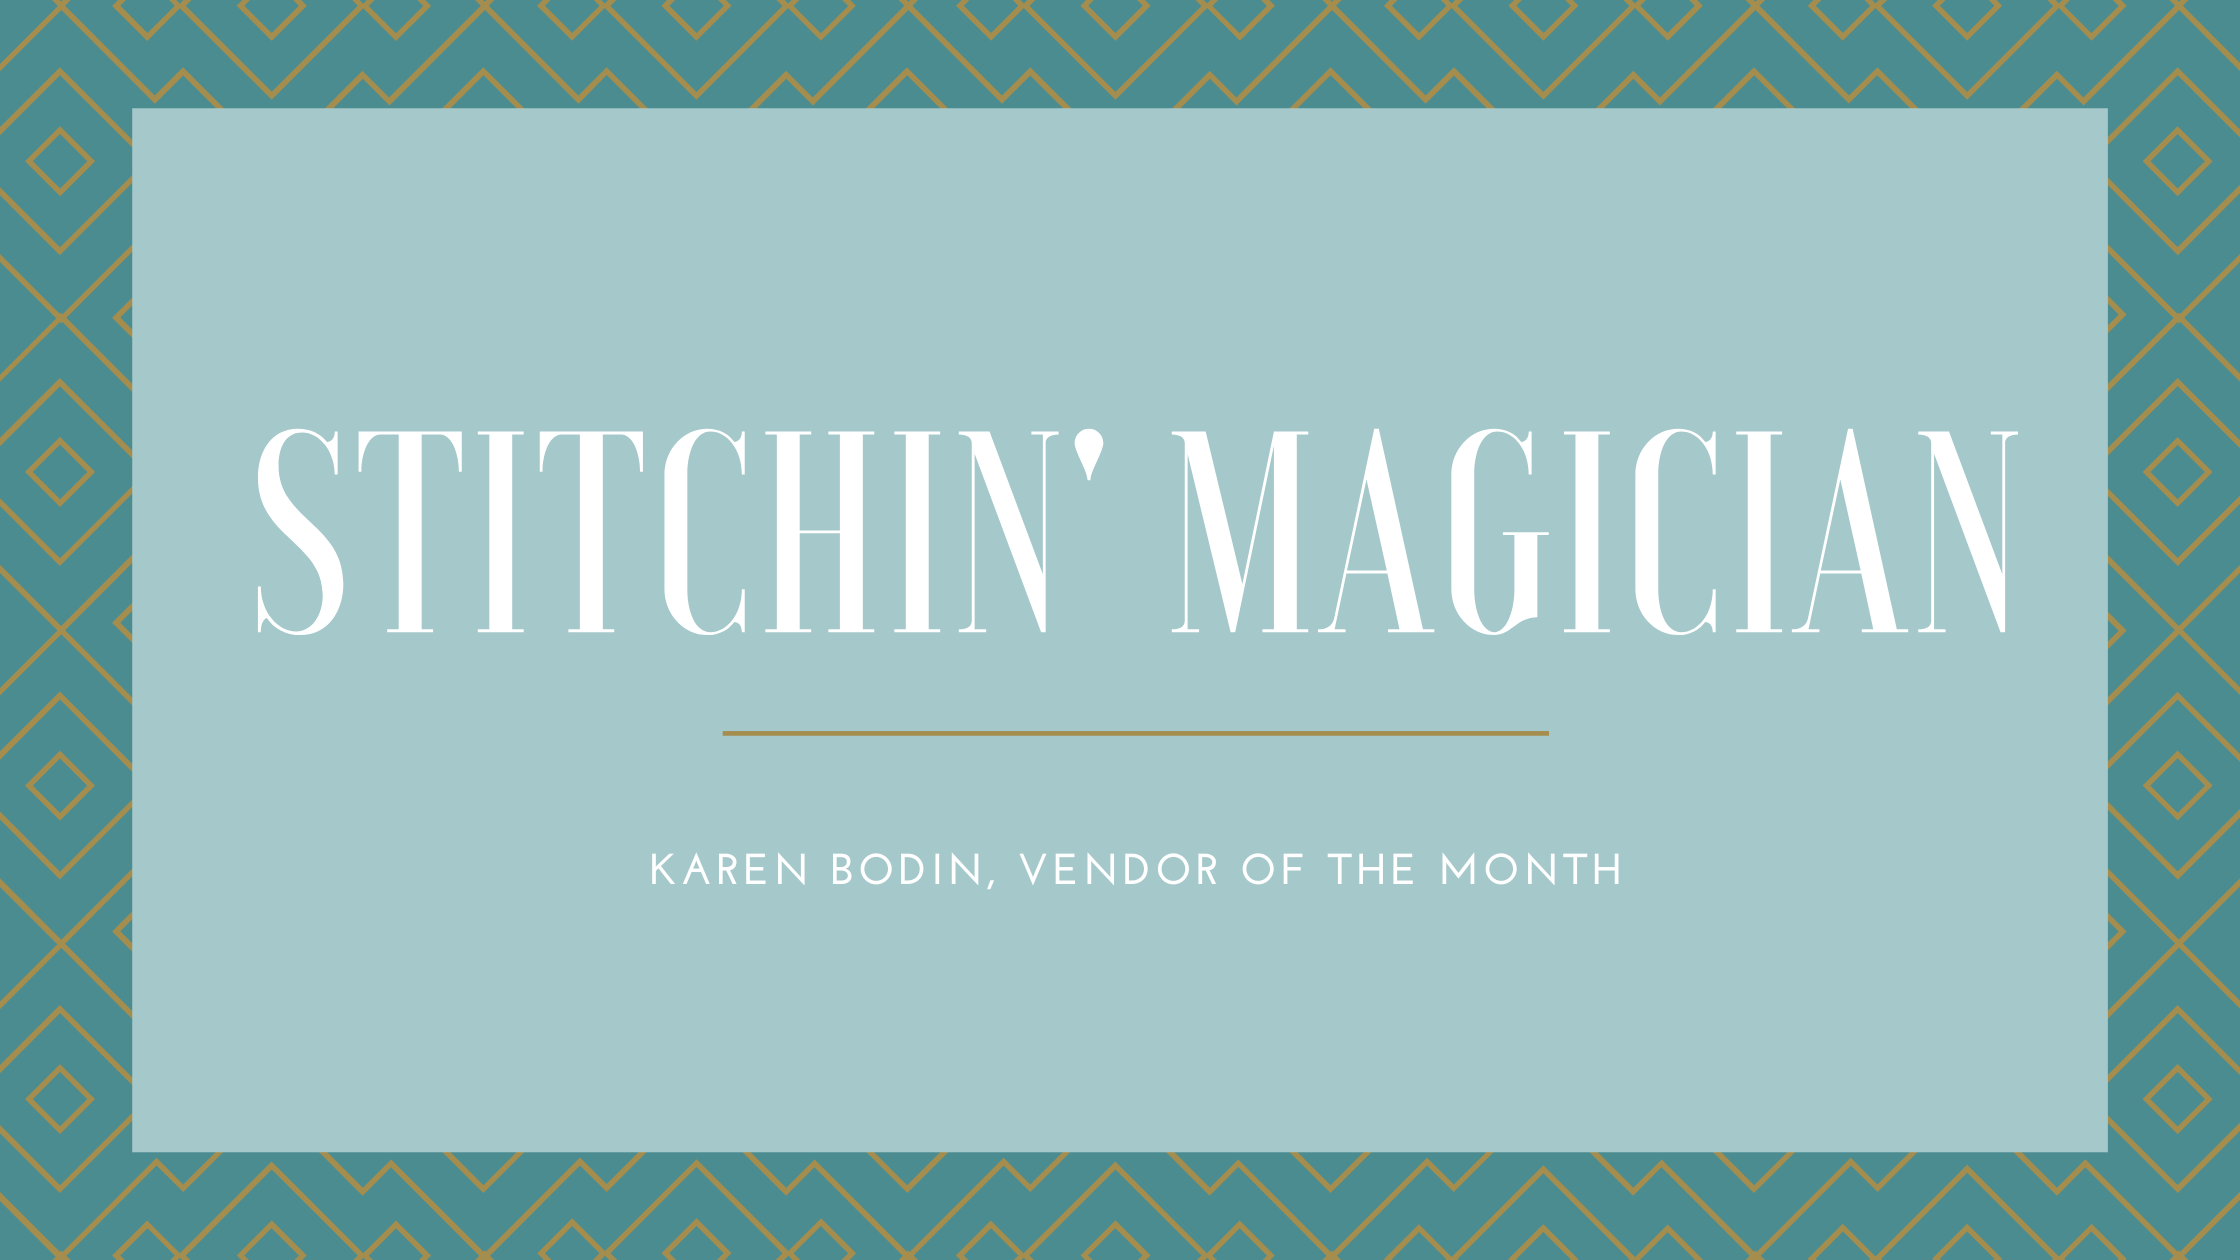 Stitchin’ Magician